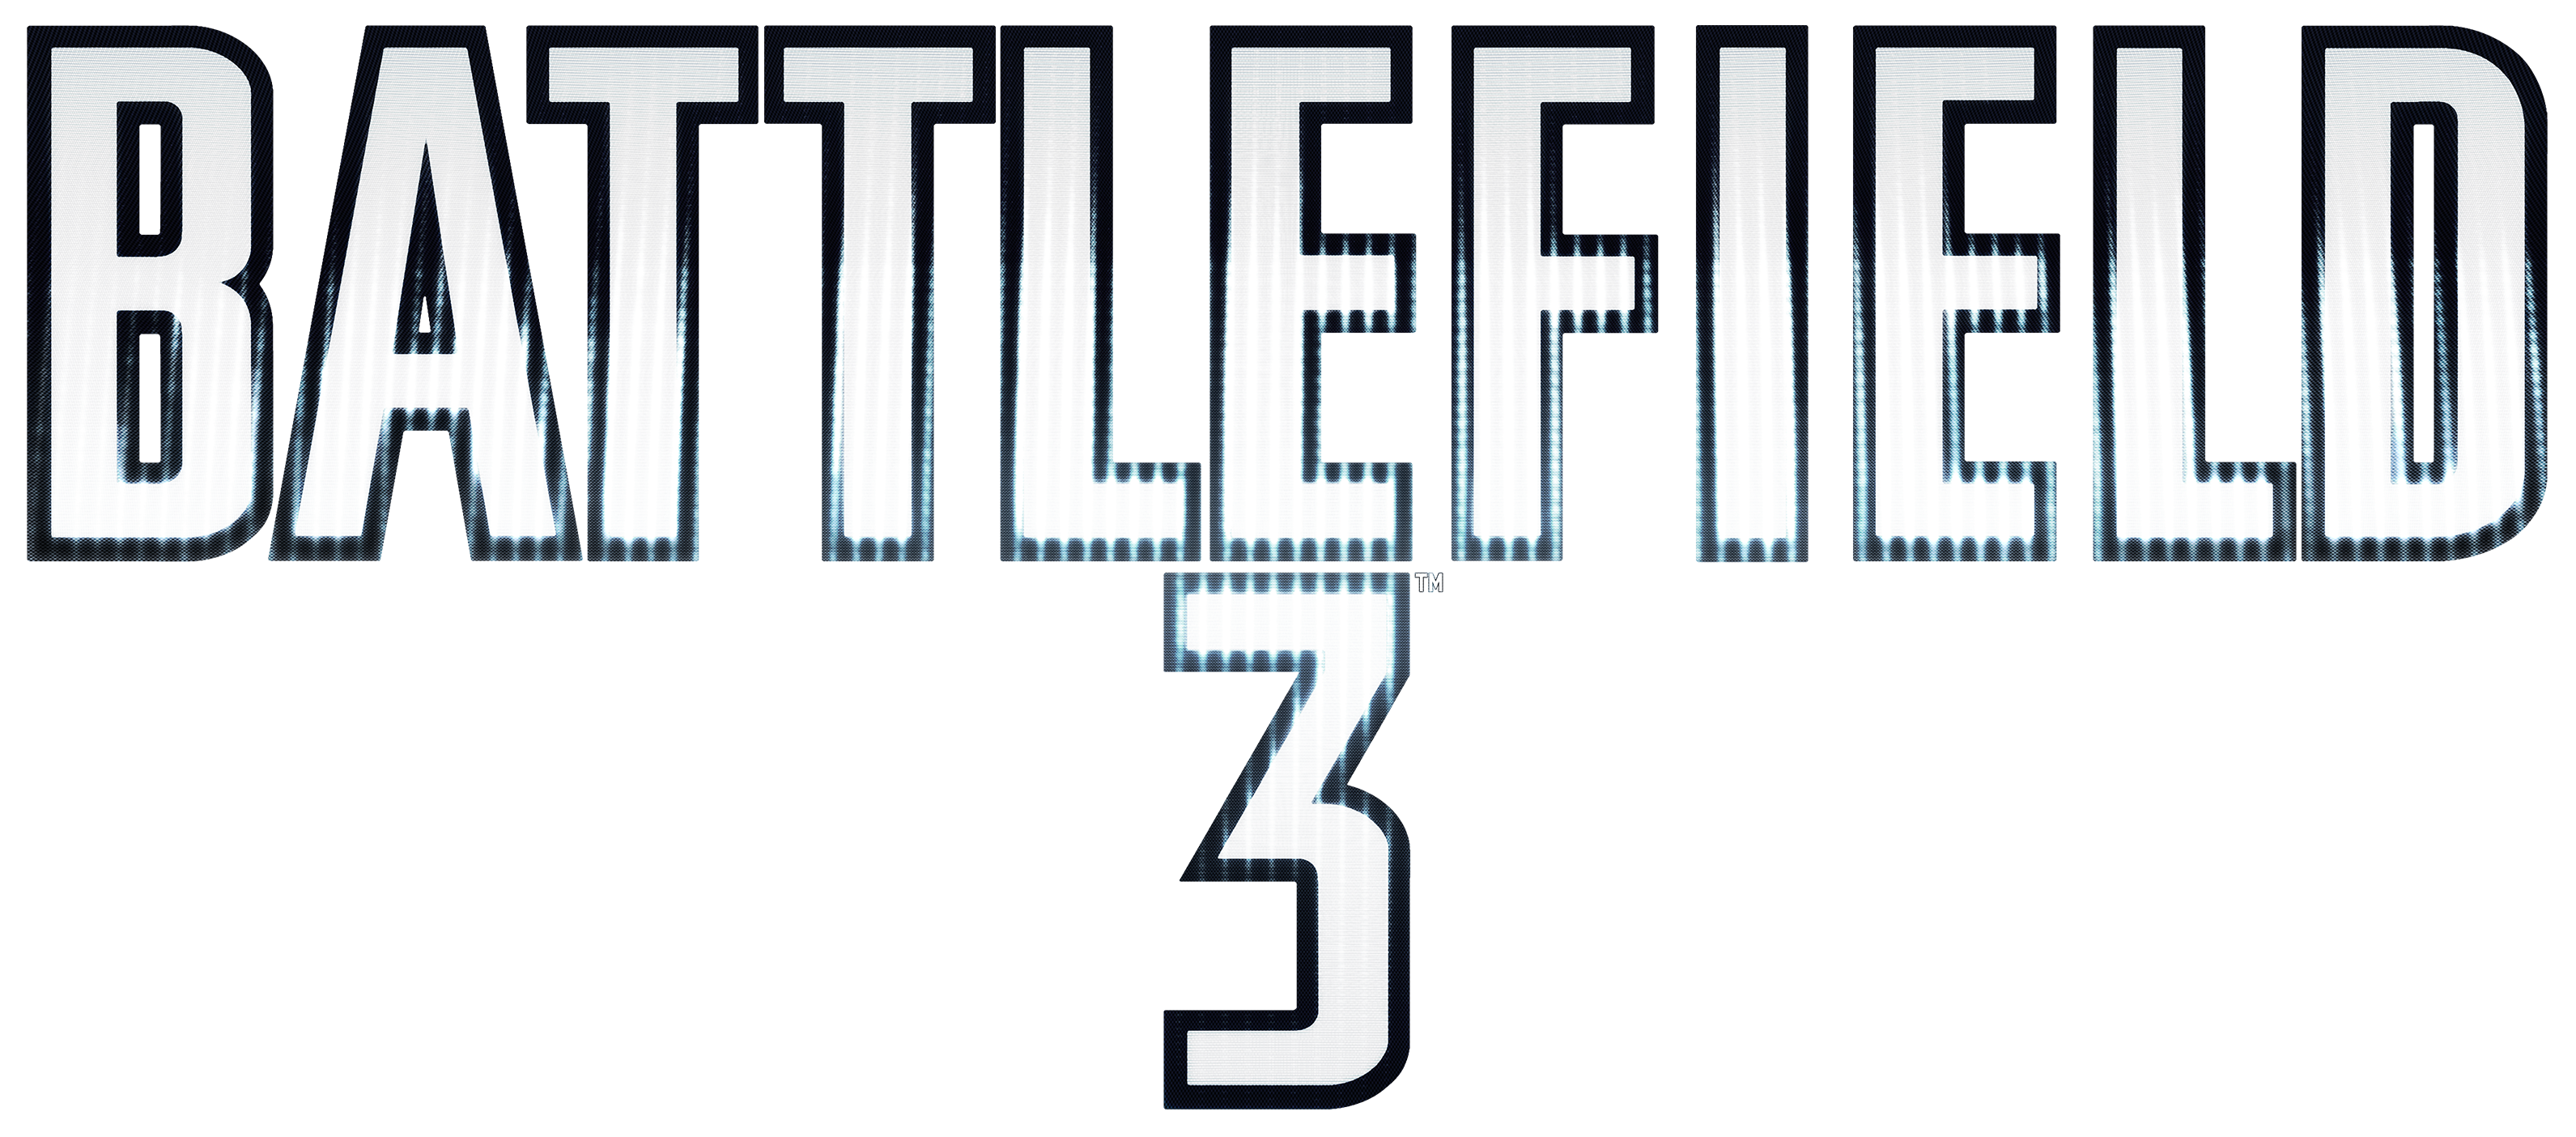 Battlefield_3_Logo